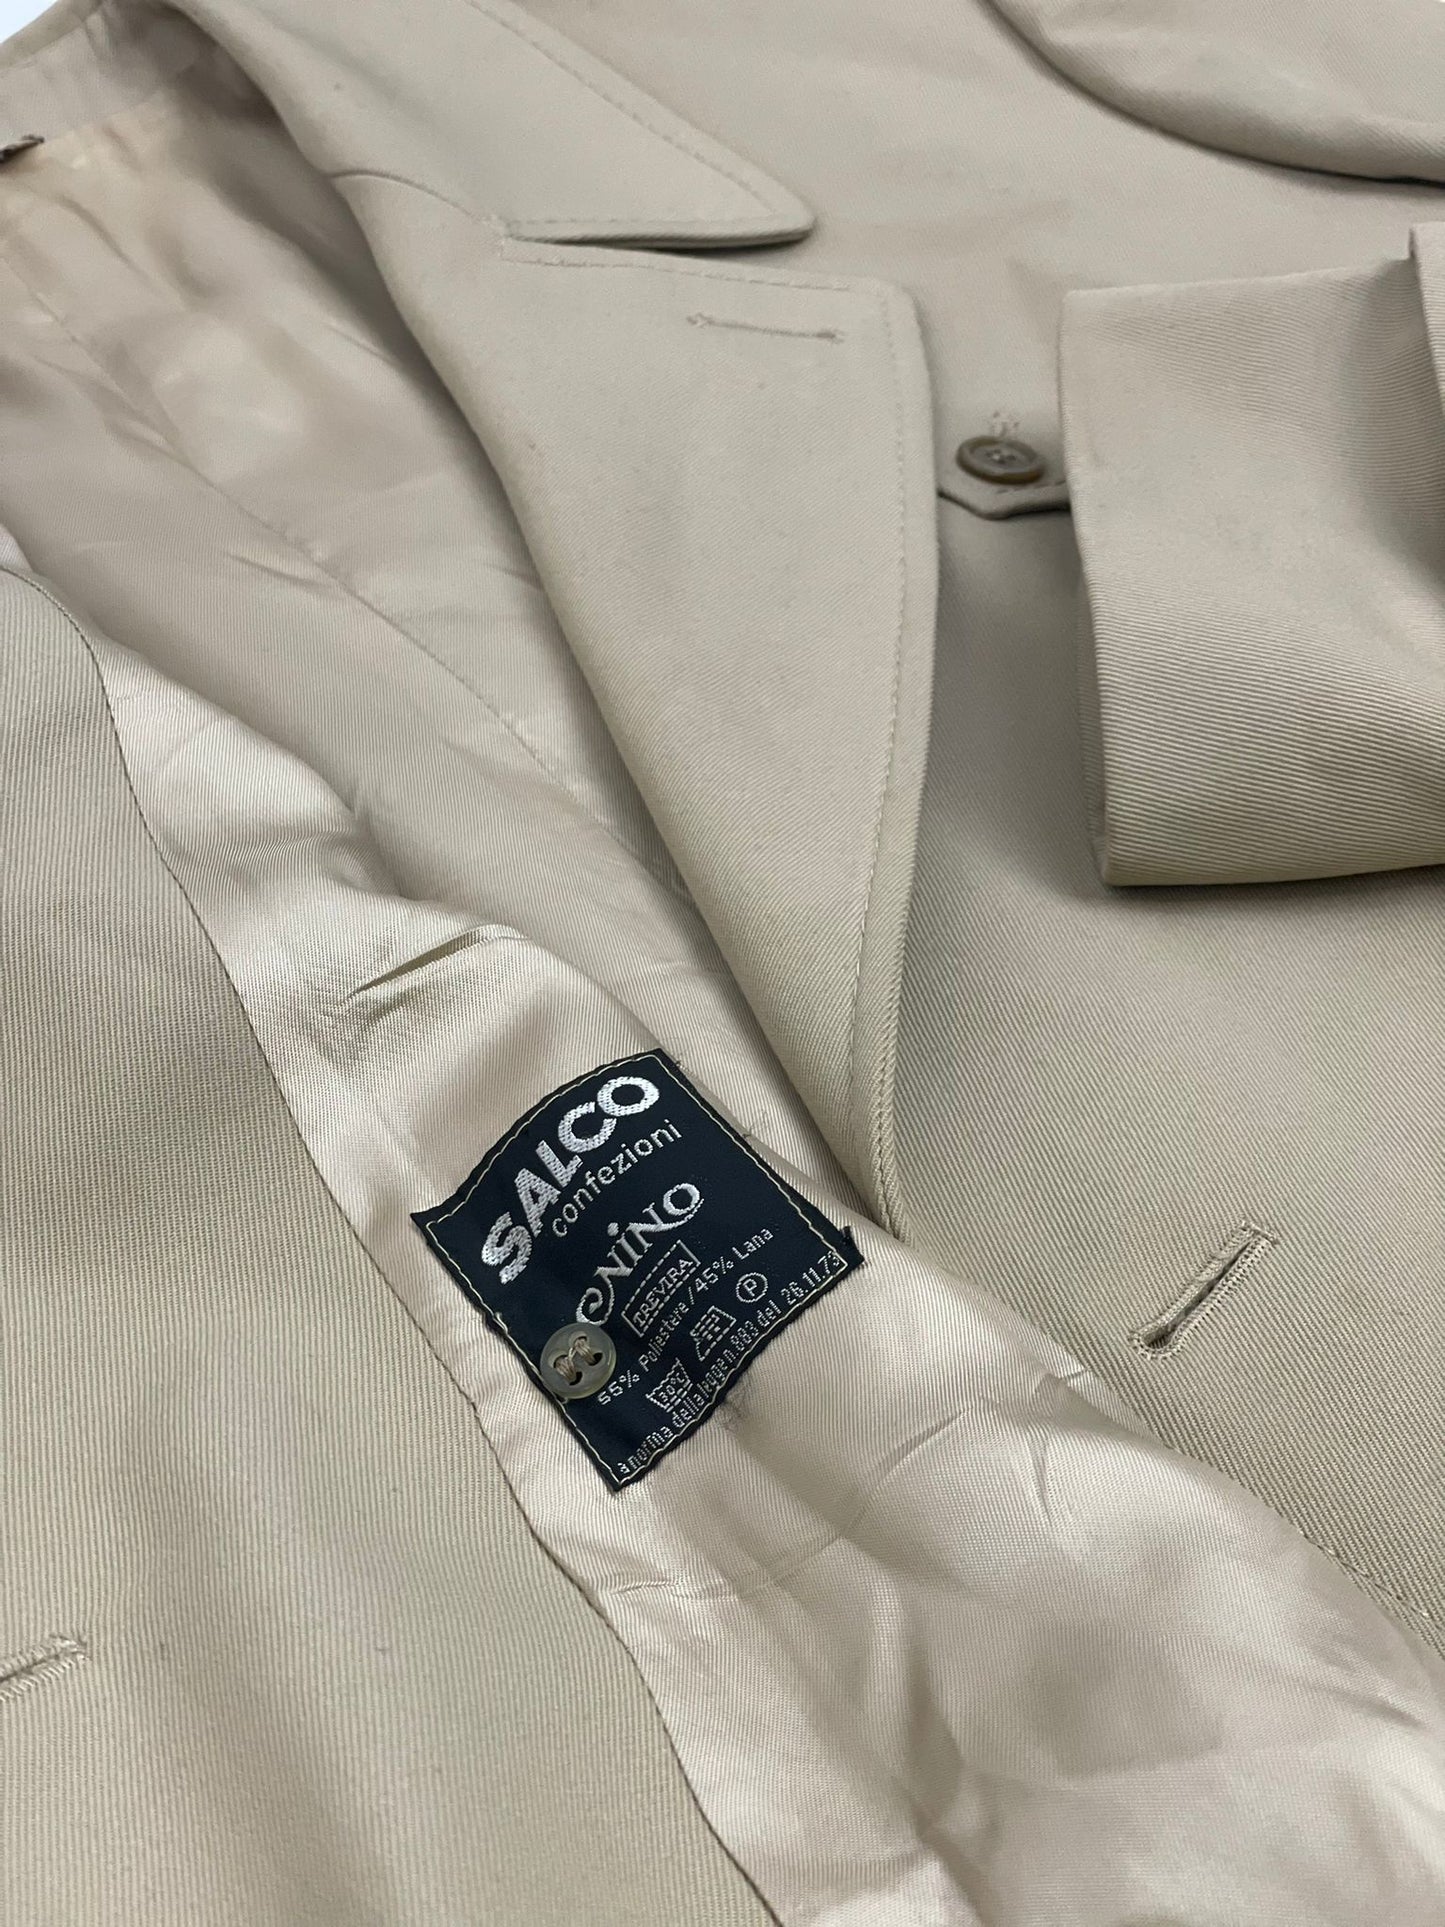 Salco trench coat